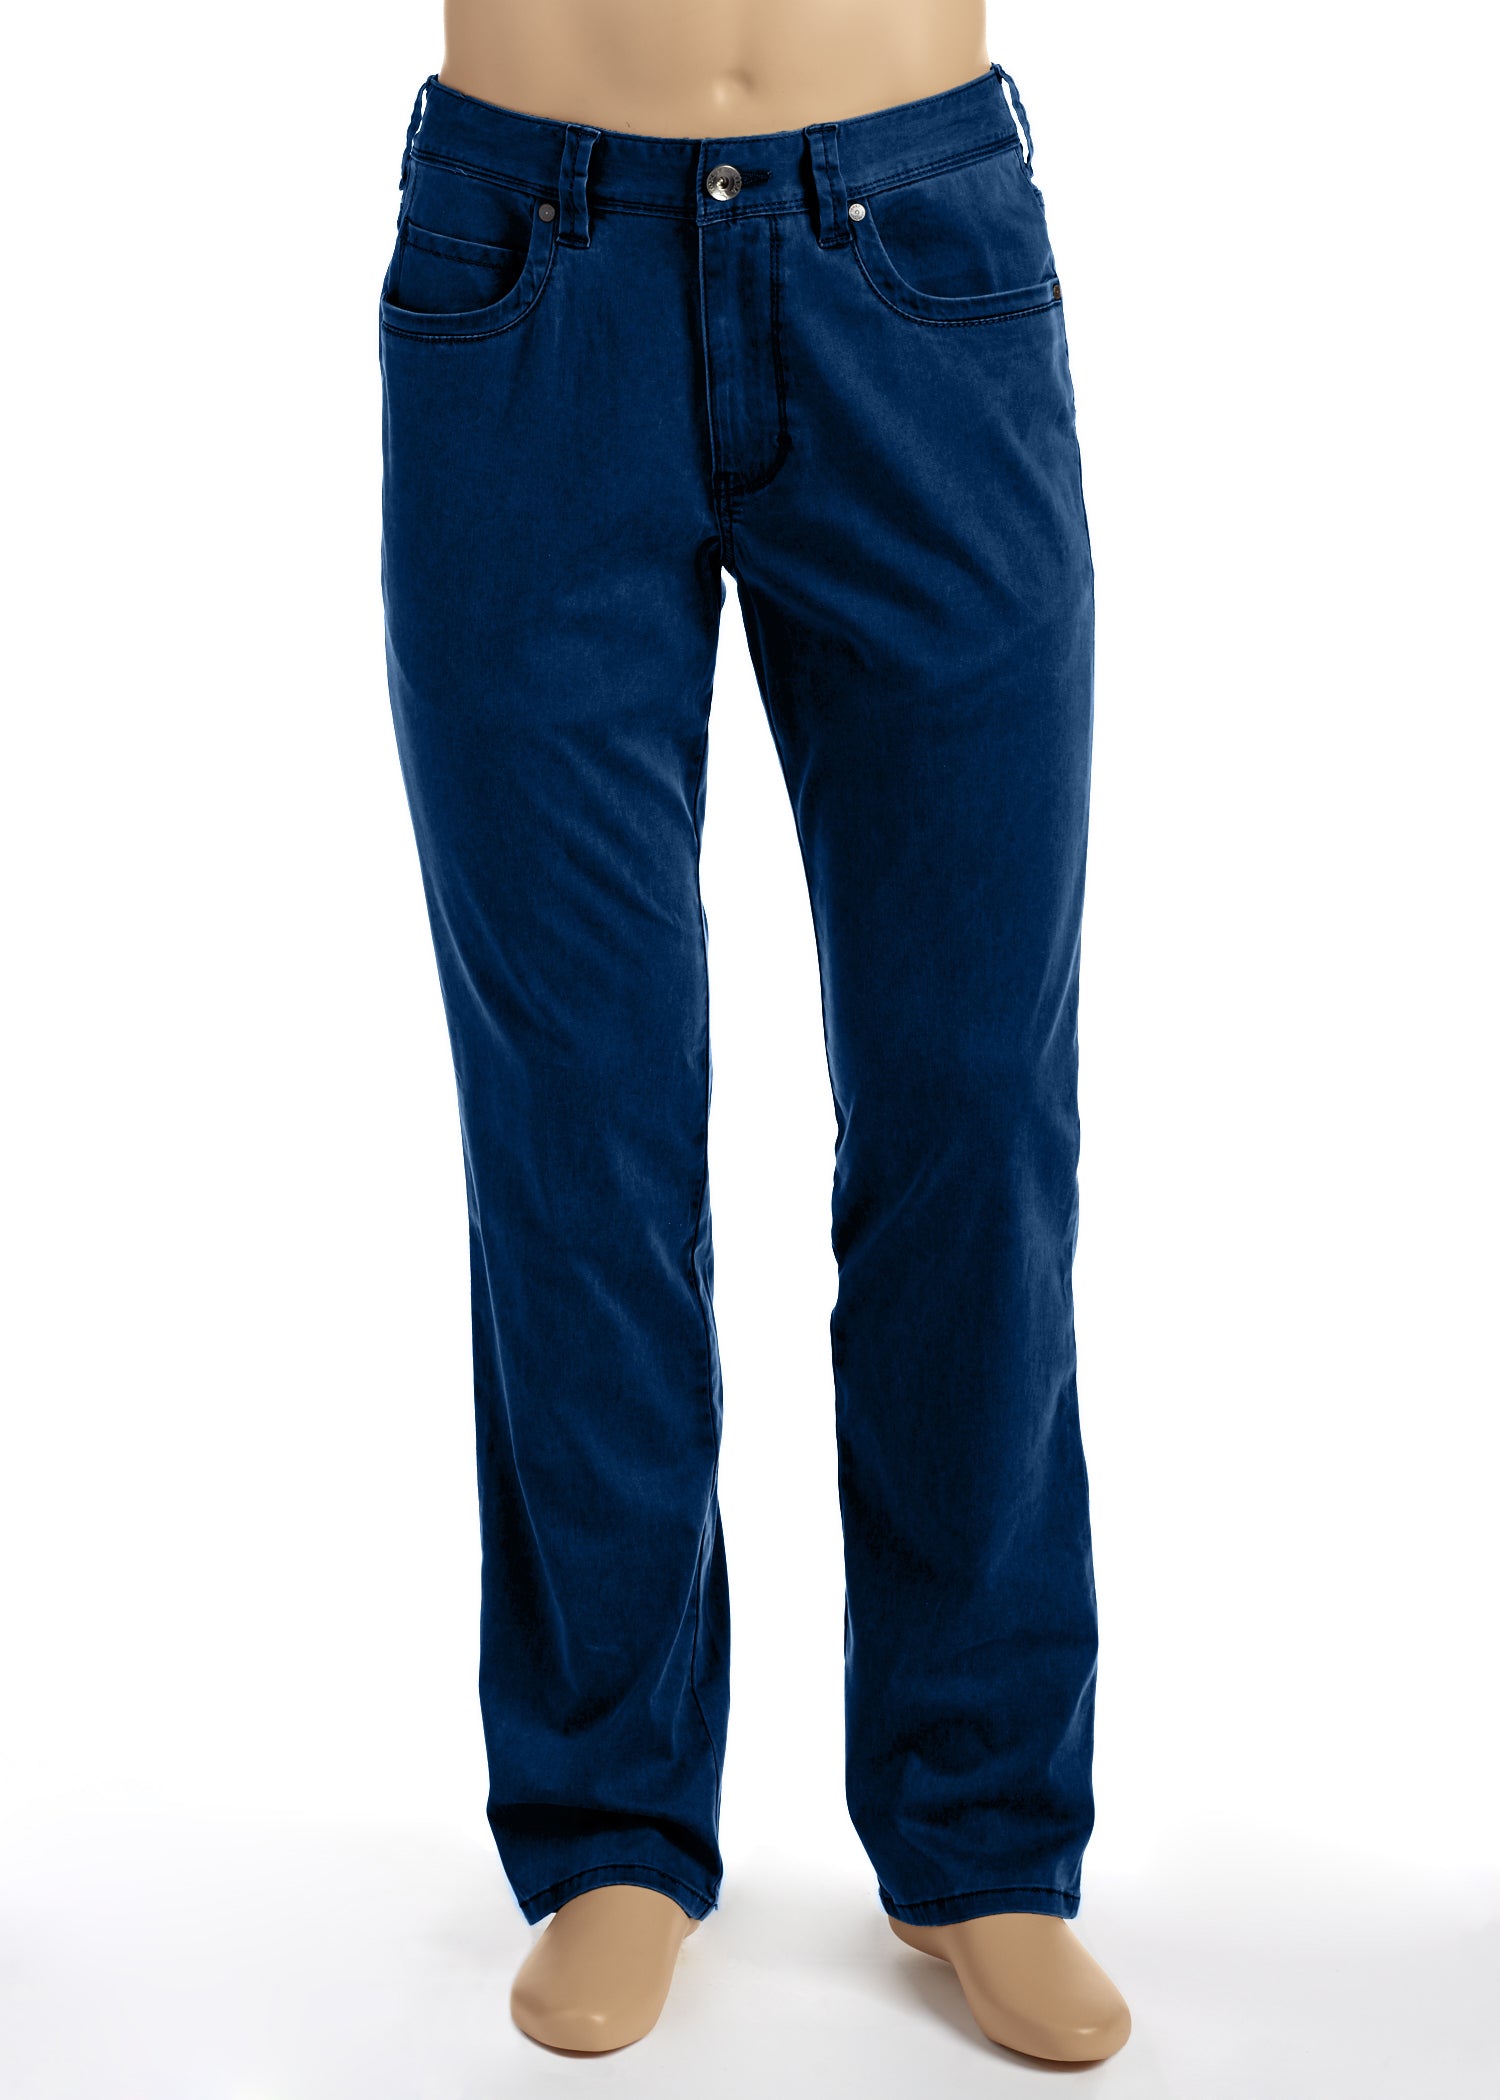 Tommy Bahama - Boracay 5 Pocket Pant - T115497 - BrownsMenswear.com